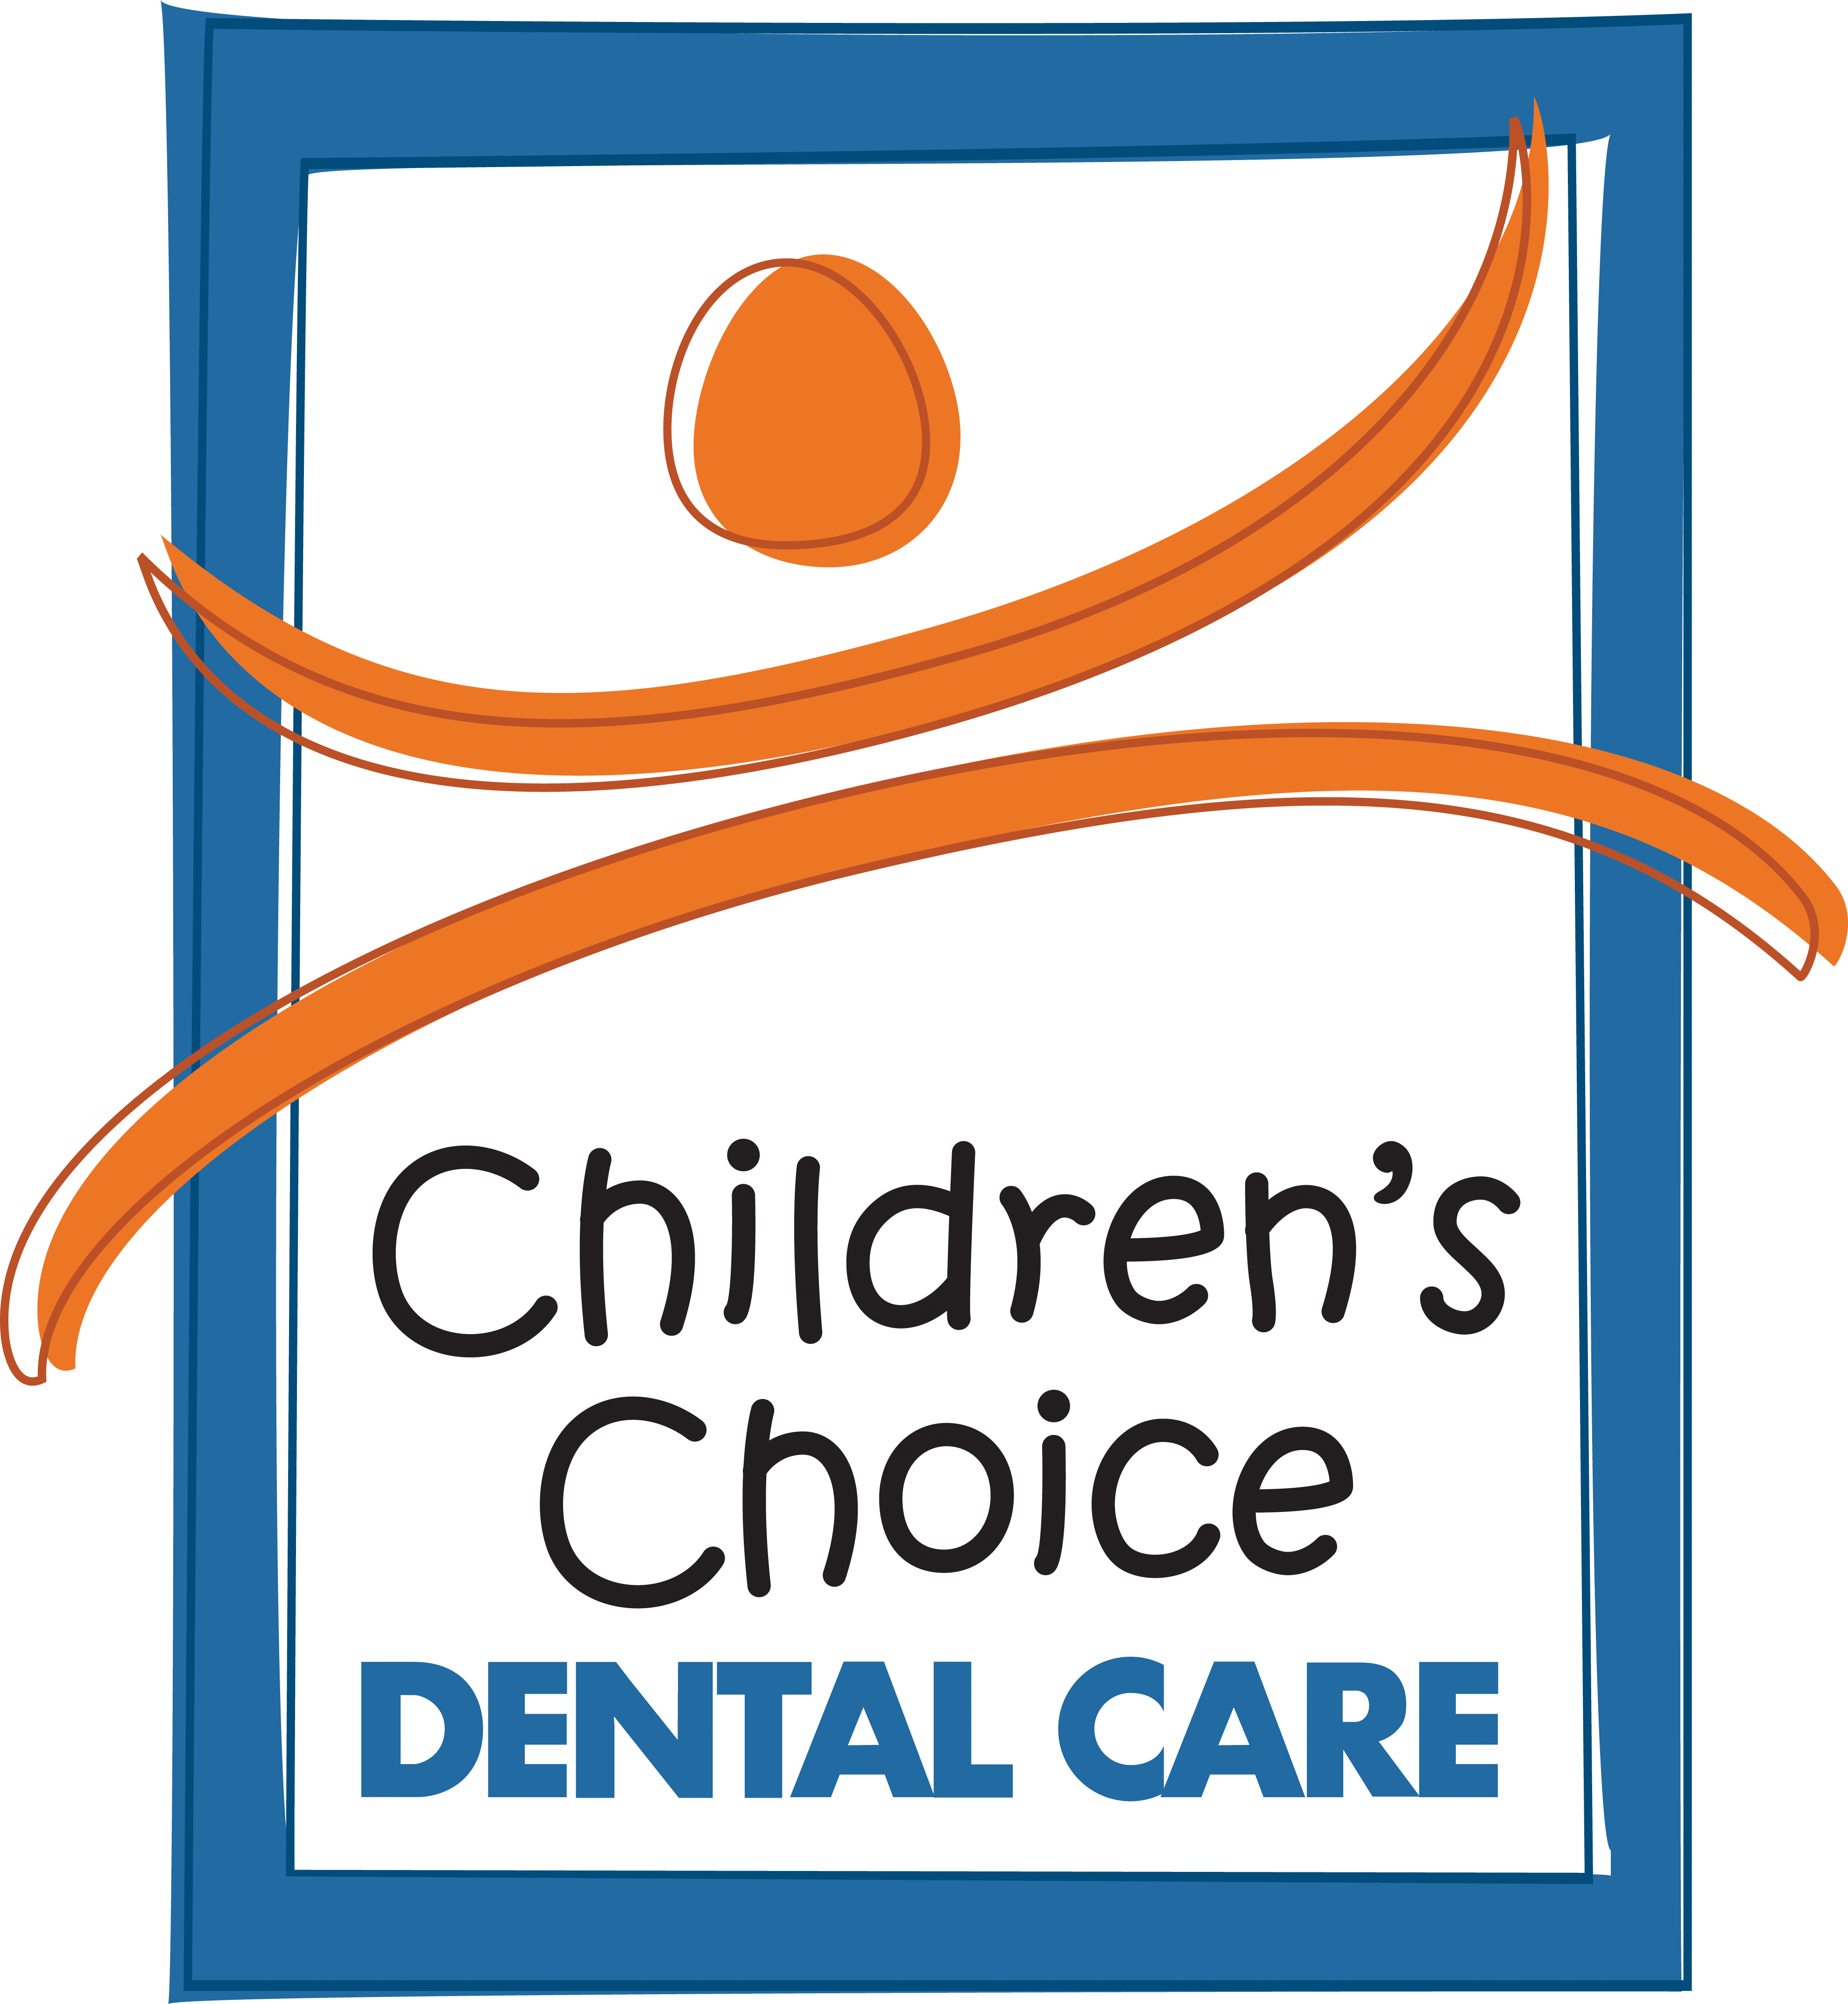 Children’s Choice Dental Care